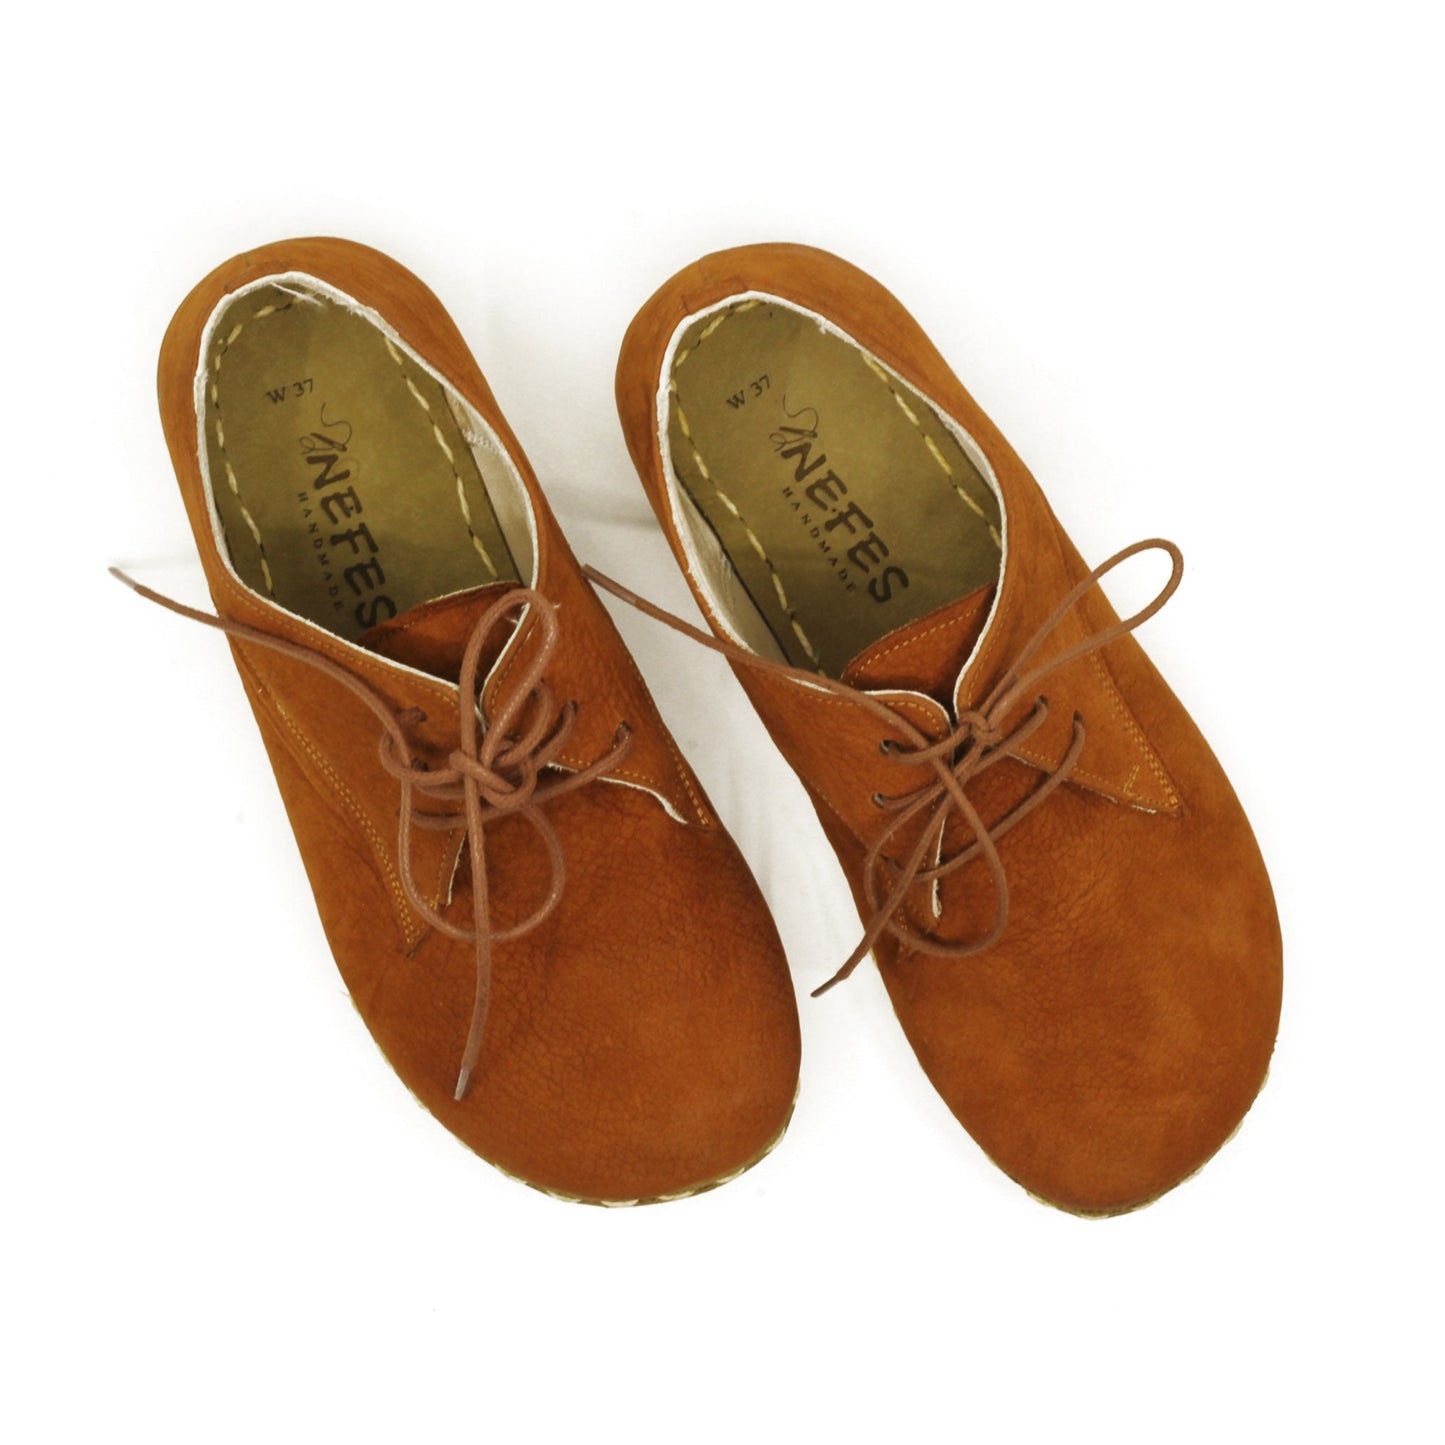 barefoot shoes women oxford shoes orange nubuck leather handmade lace up for women - nefes shoes